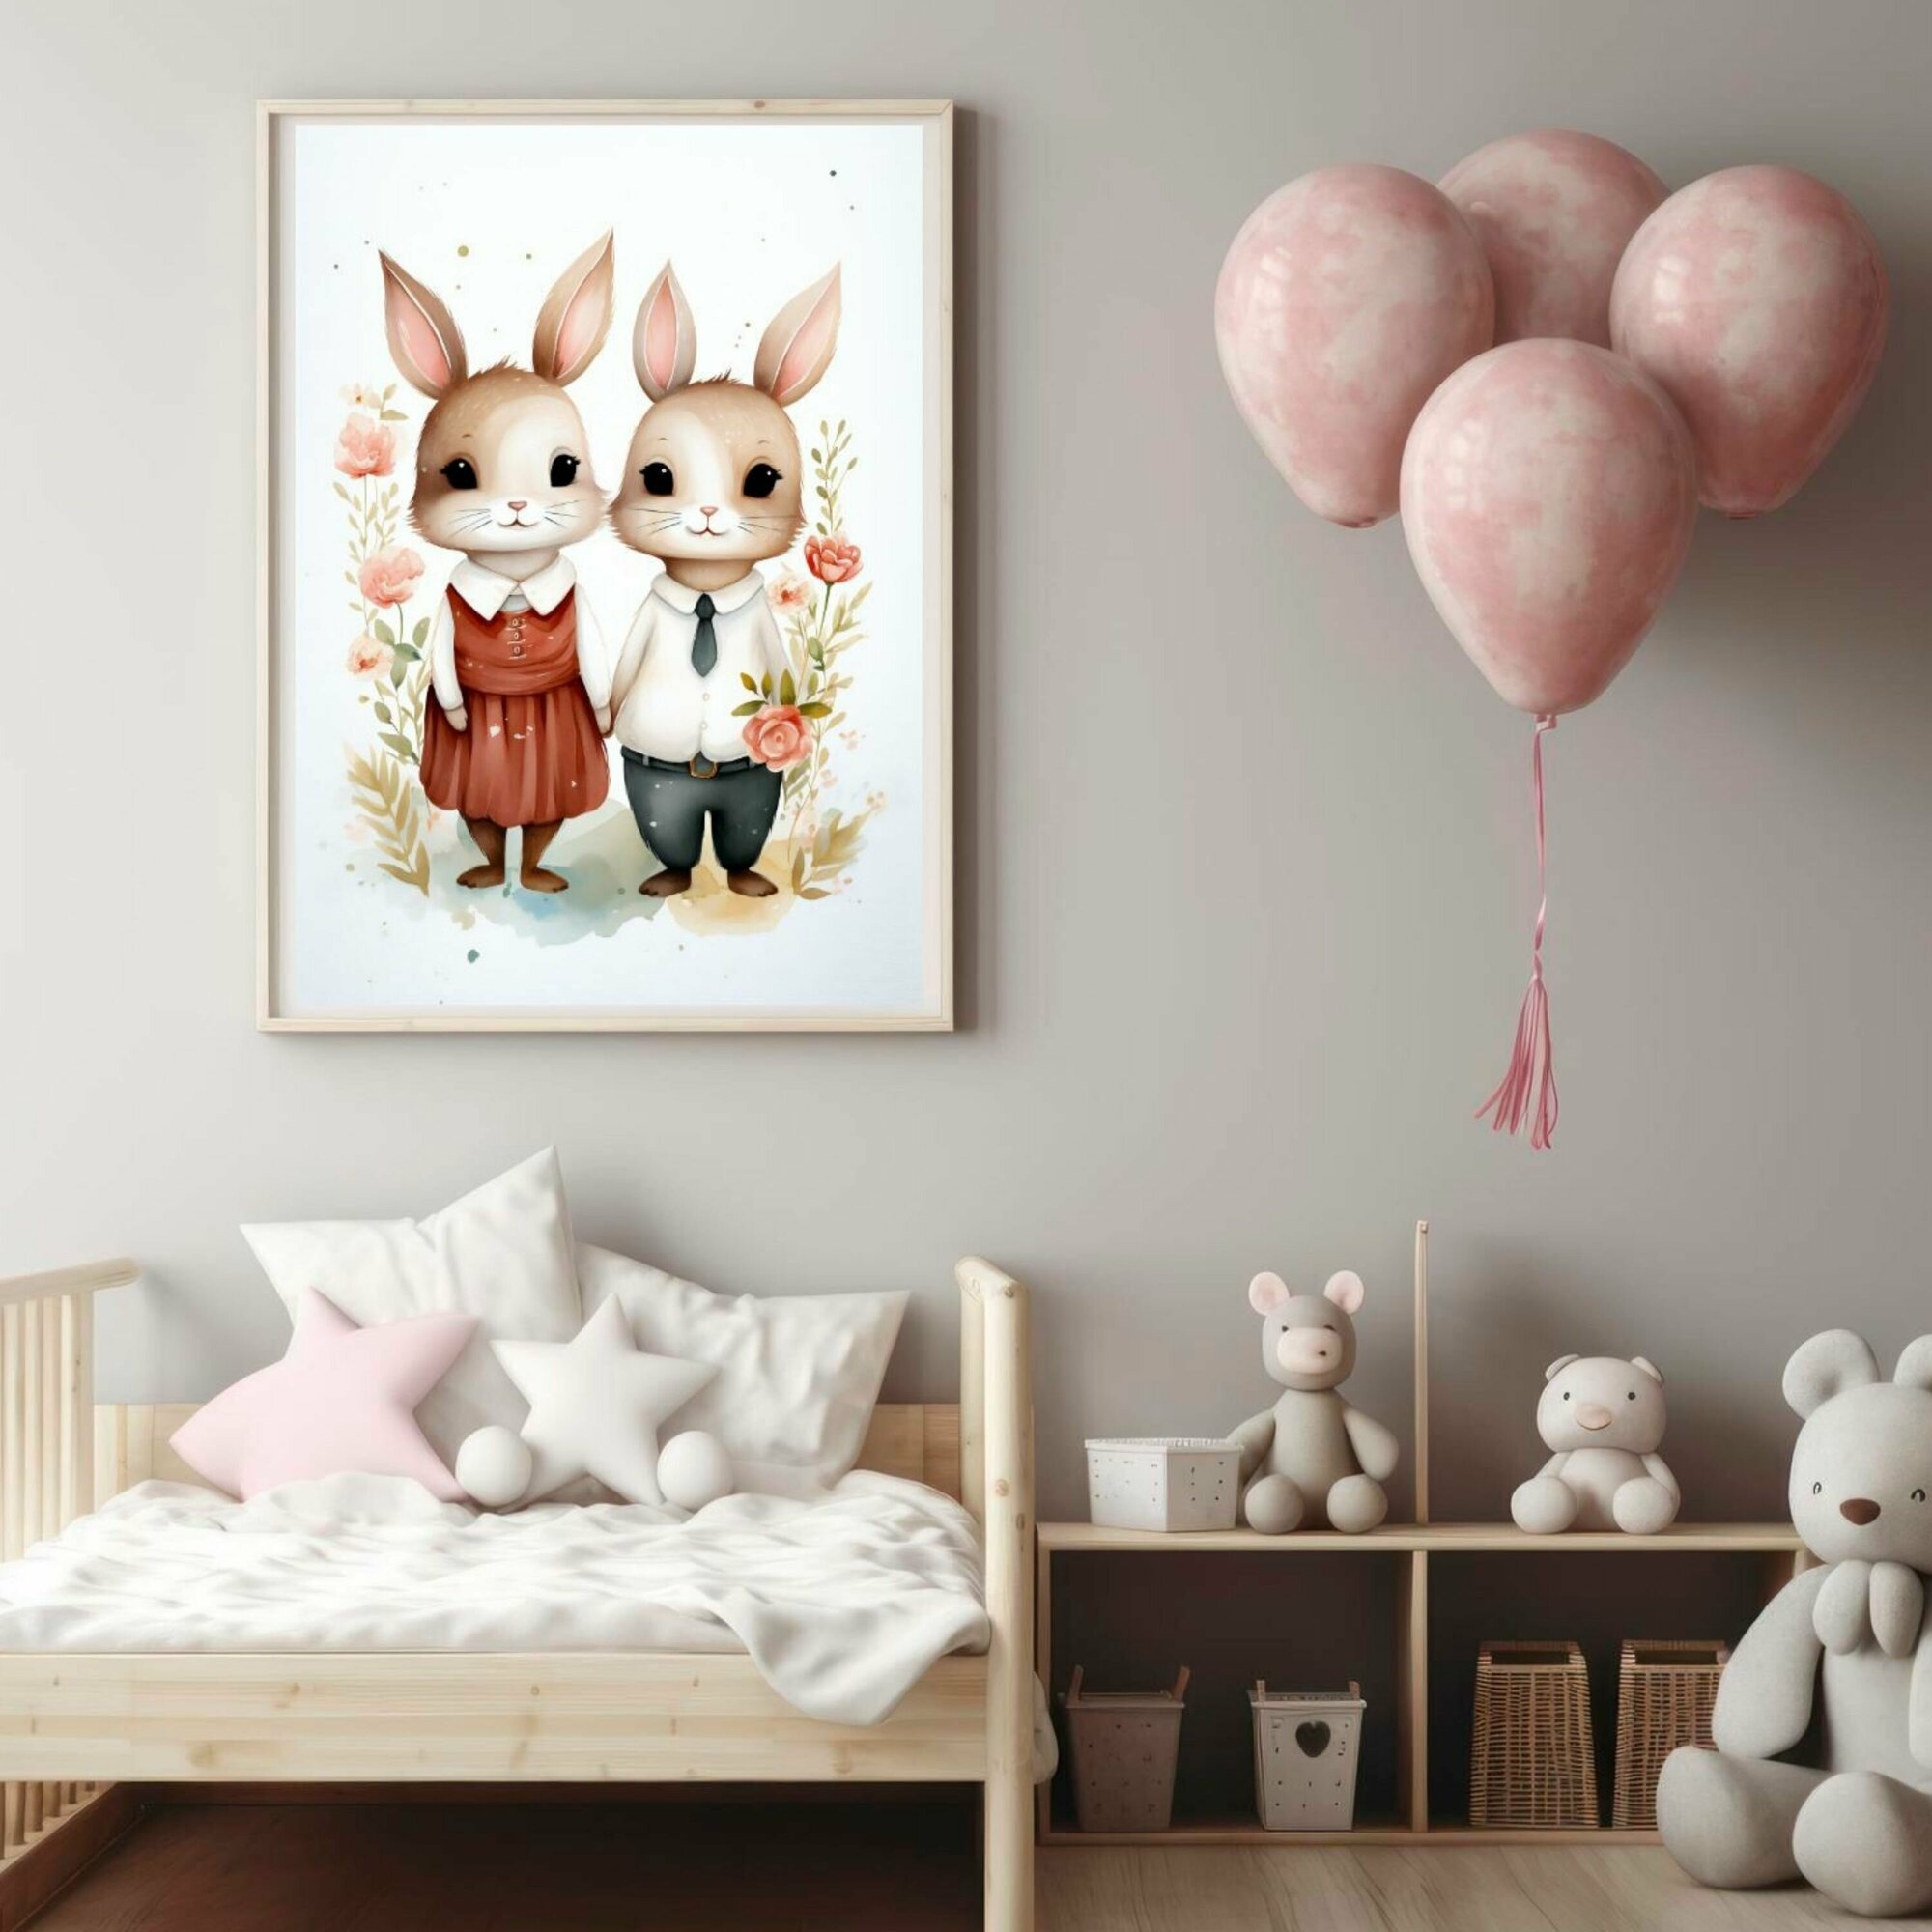 Картина/Постеры для интерьера детской "Зайчата" бумага глянцевая, размер 20х30 см.